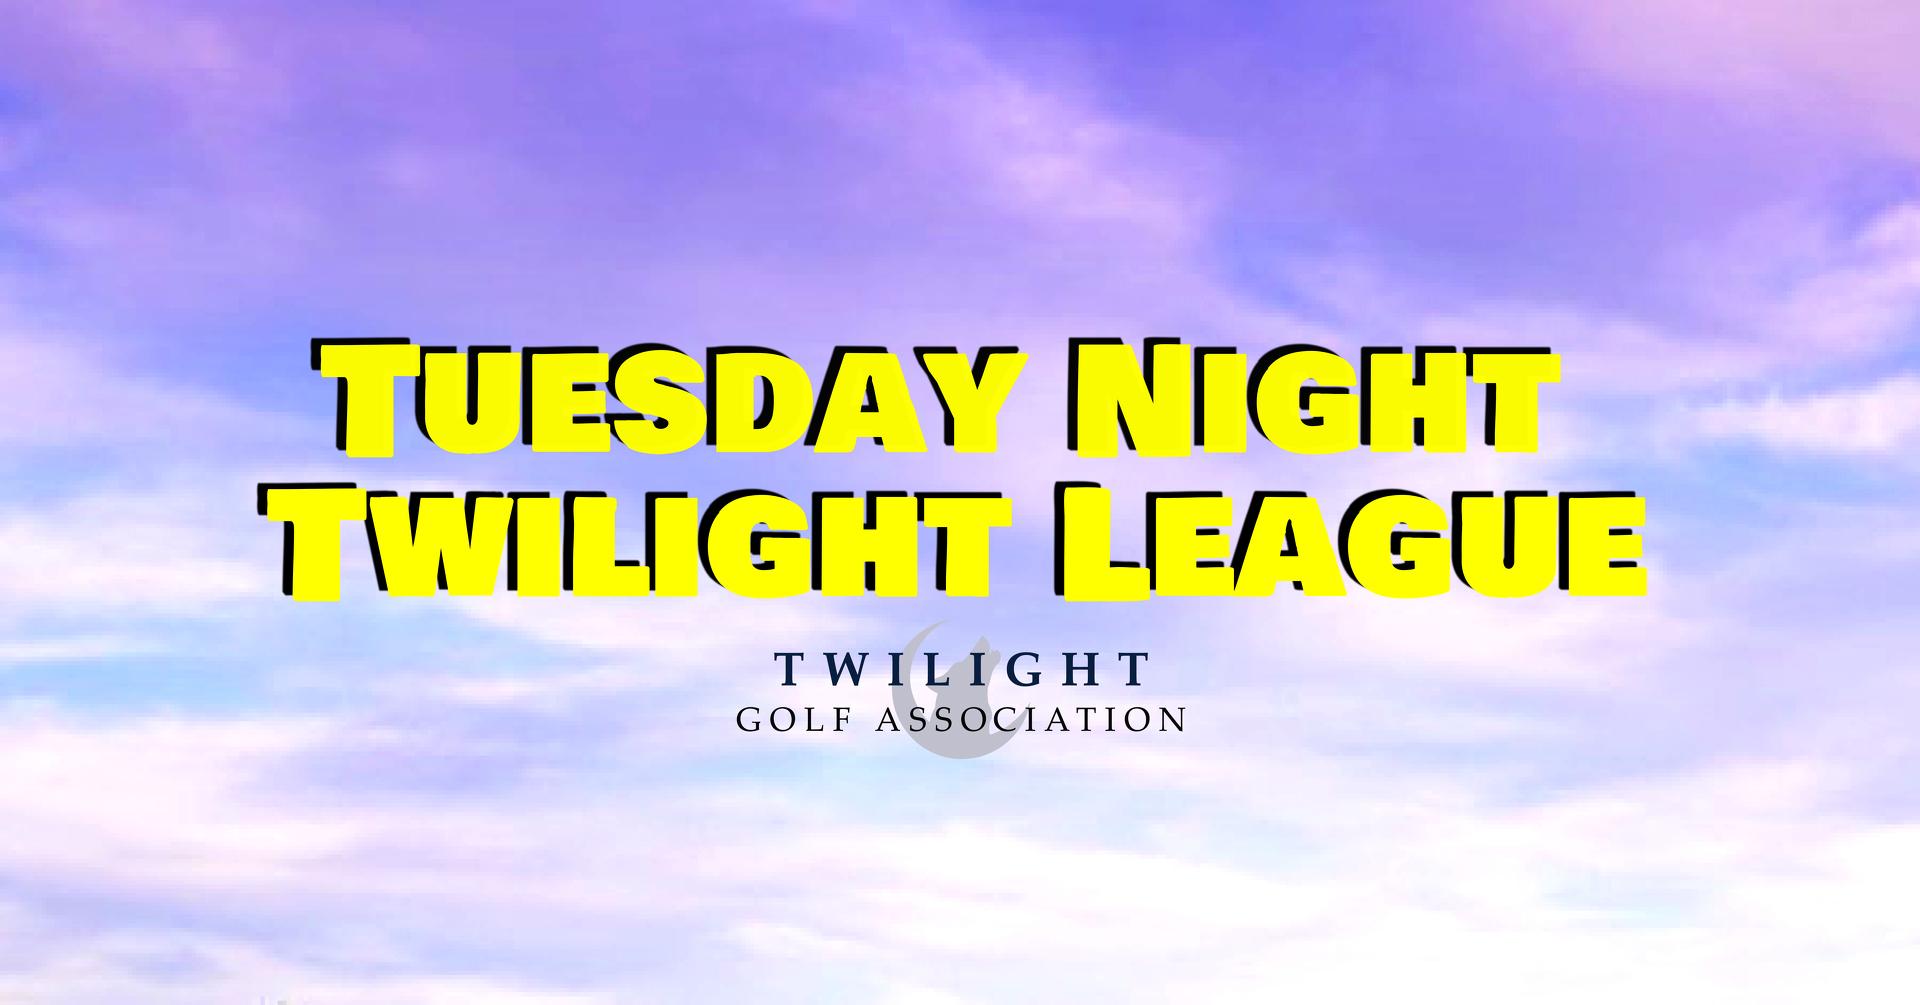 Tuesday Twilight League at Glenwood Golf Club